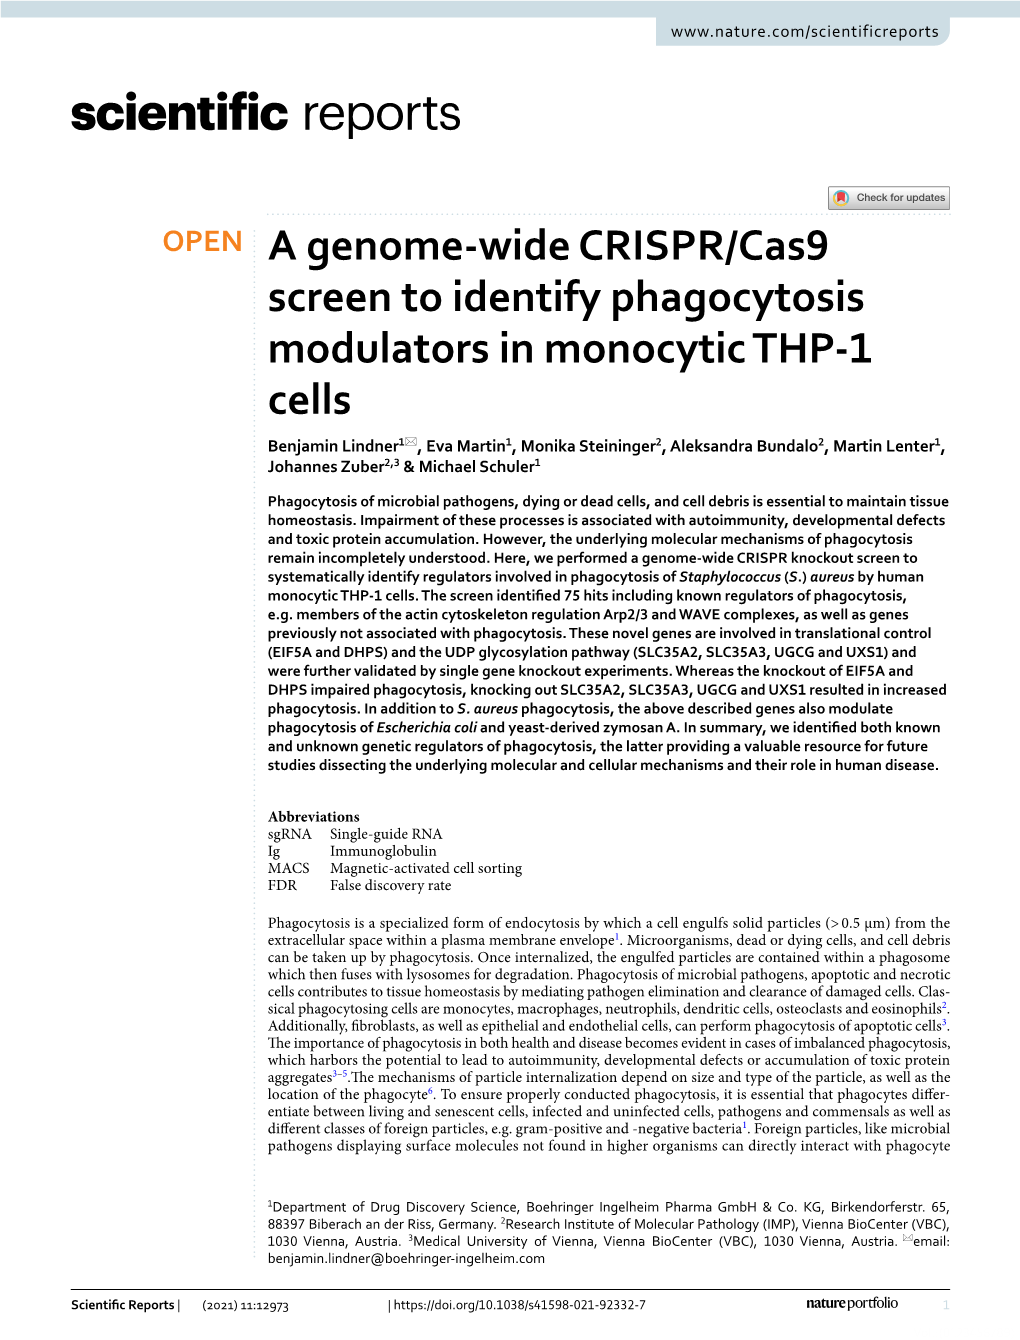 A Genome-Wide CRISPR/Cas9 Screen to Identify Phagocytosis Modulators